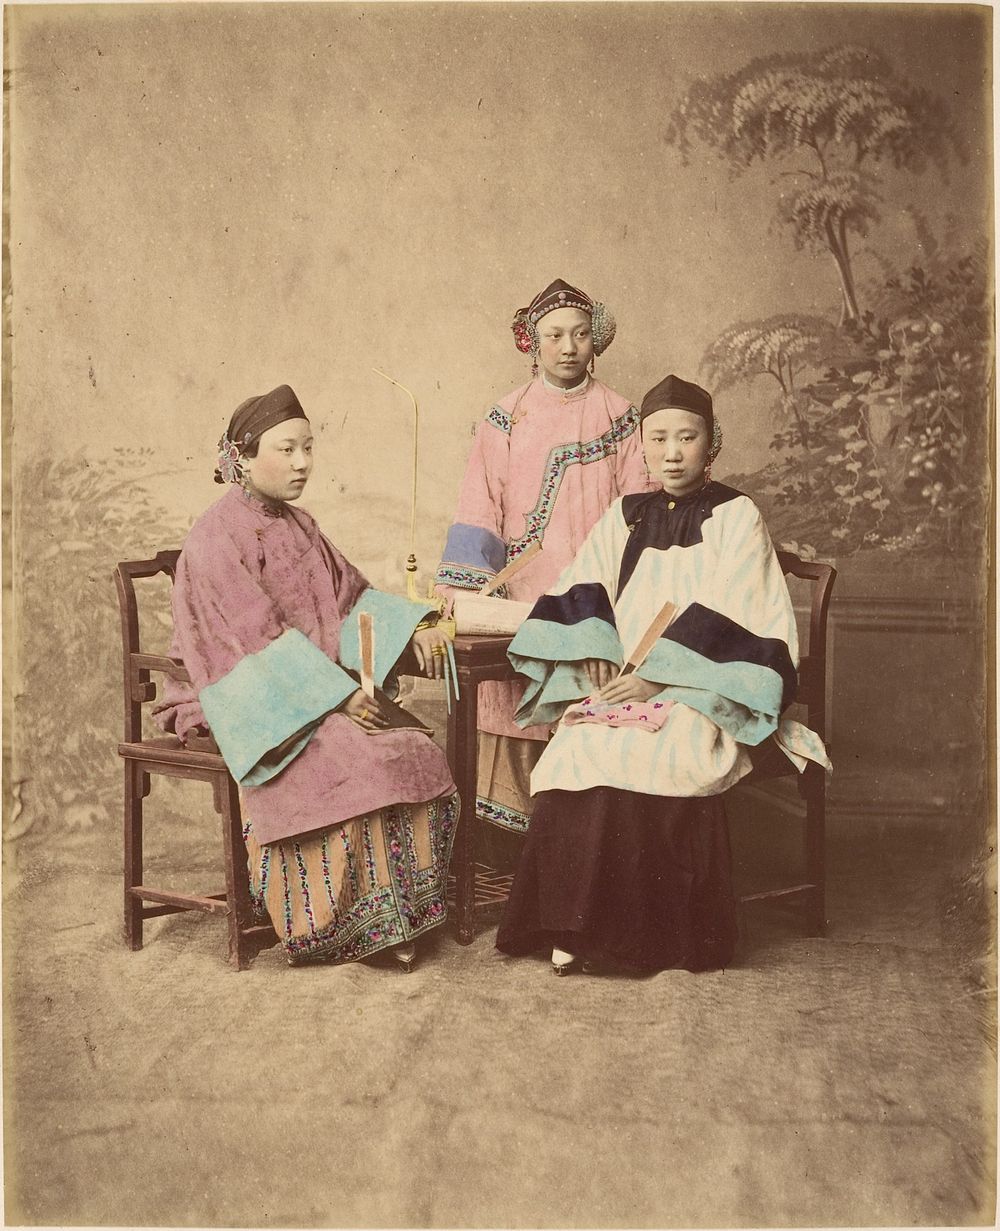 Filles de Sootchow (Suzhou Girls)